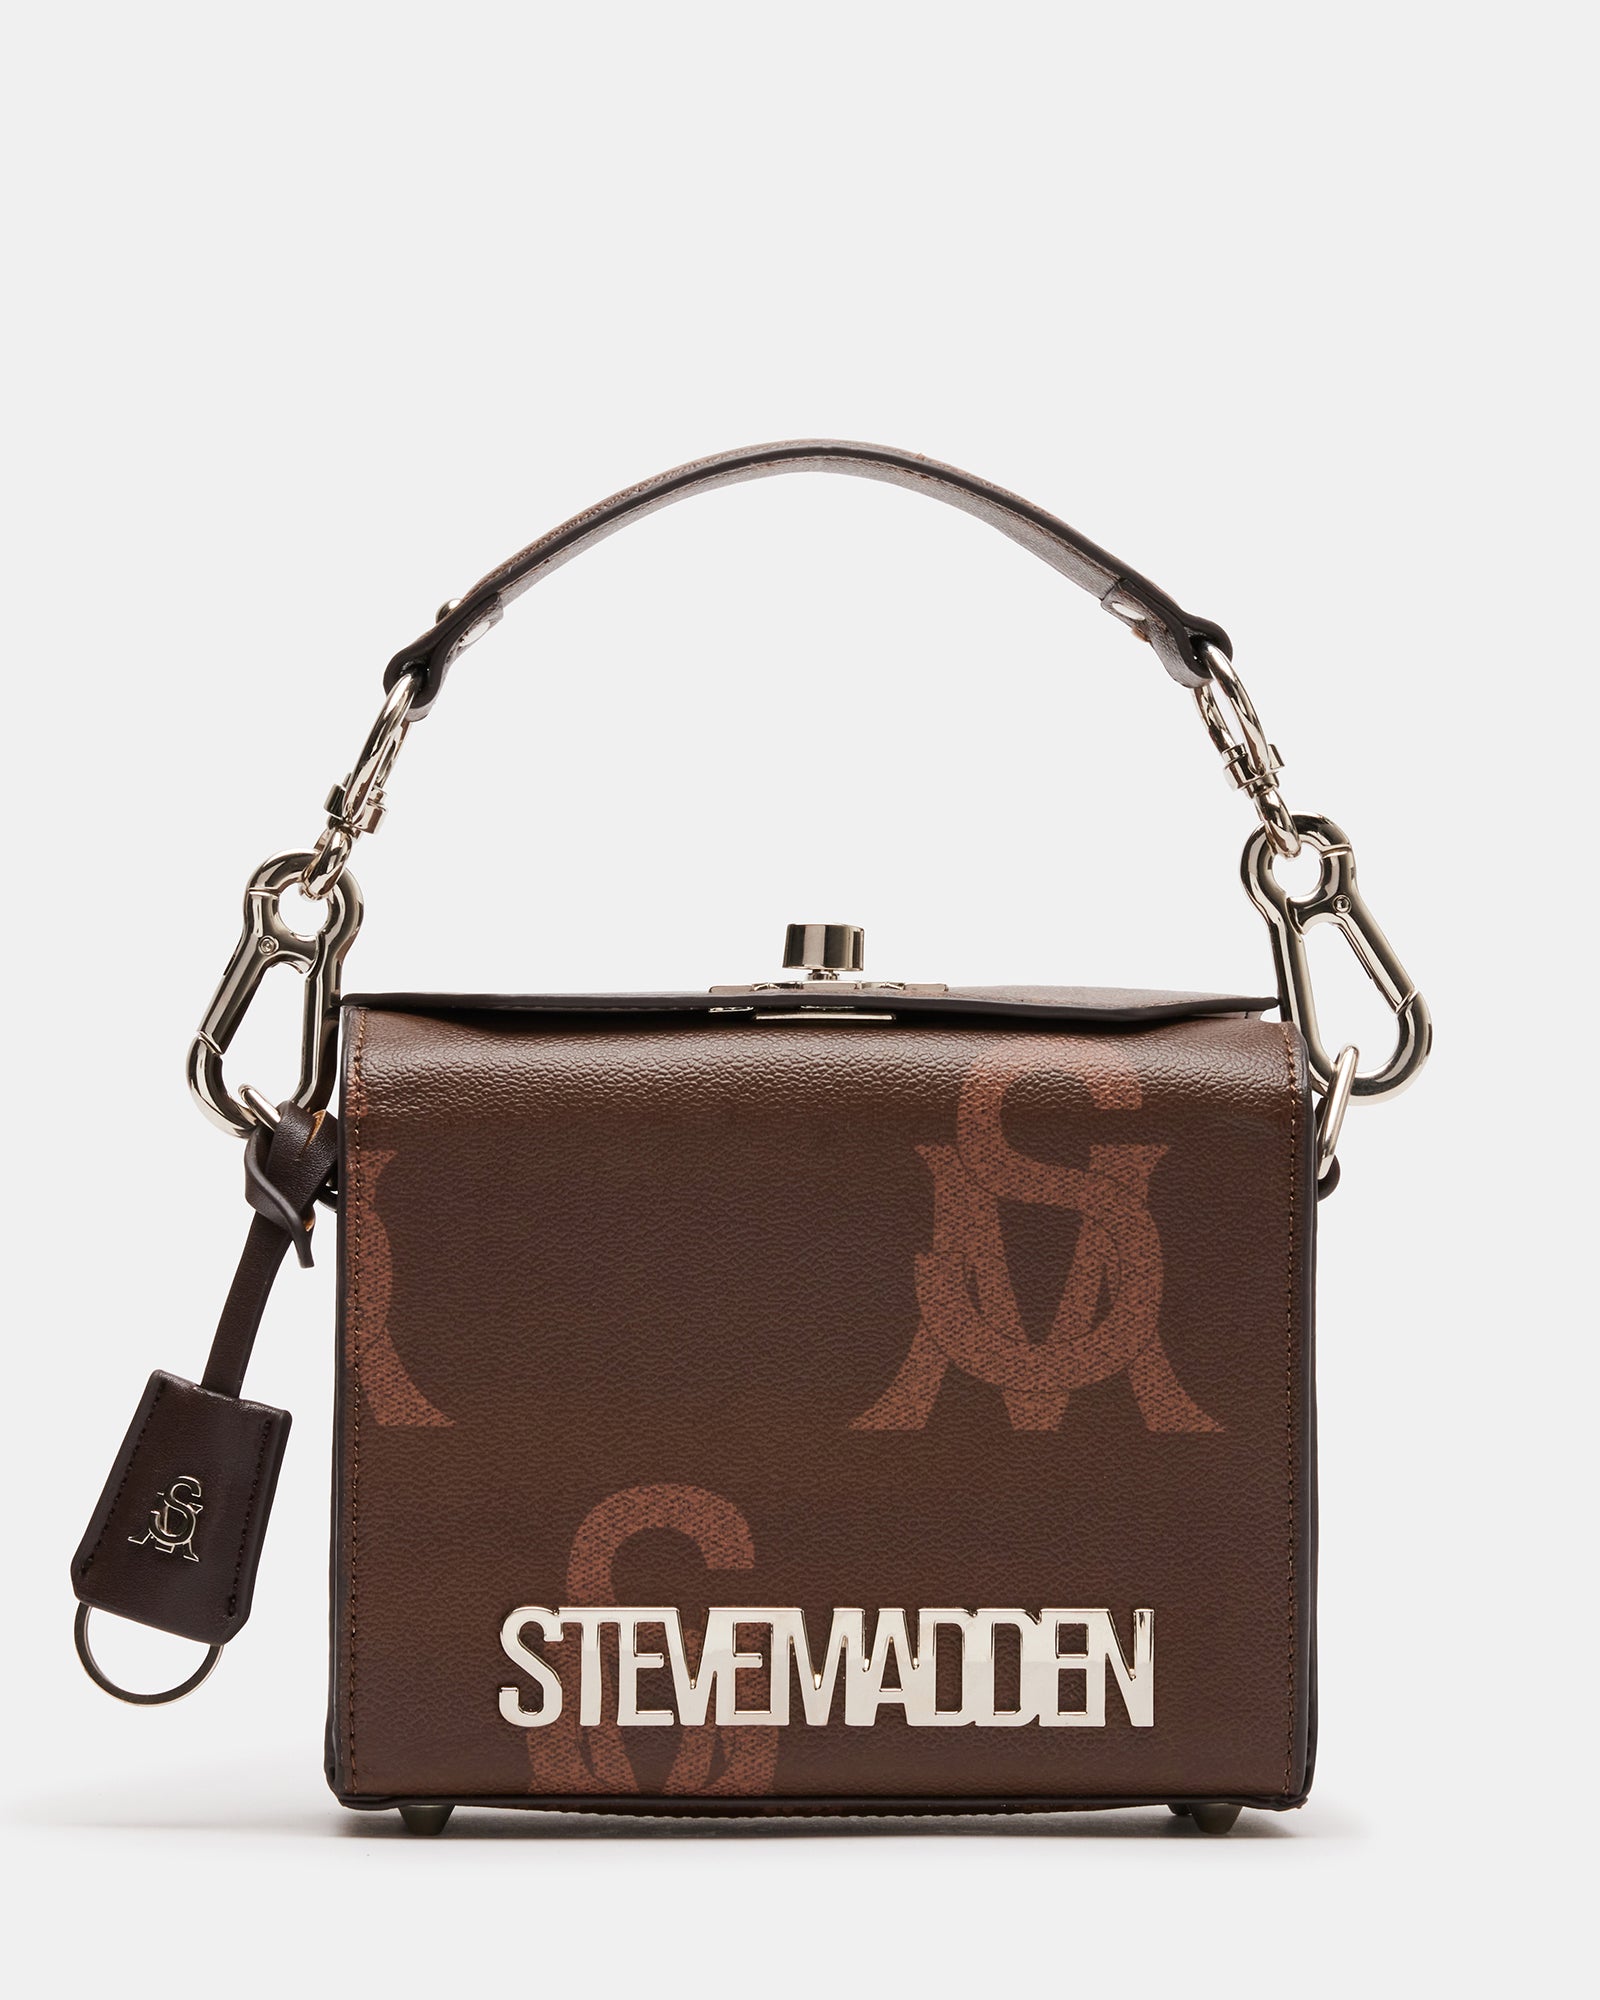 Steve Madden Kinder Box Bag, Chocolate